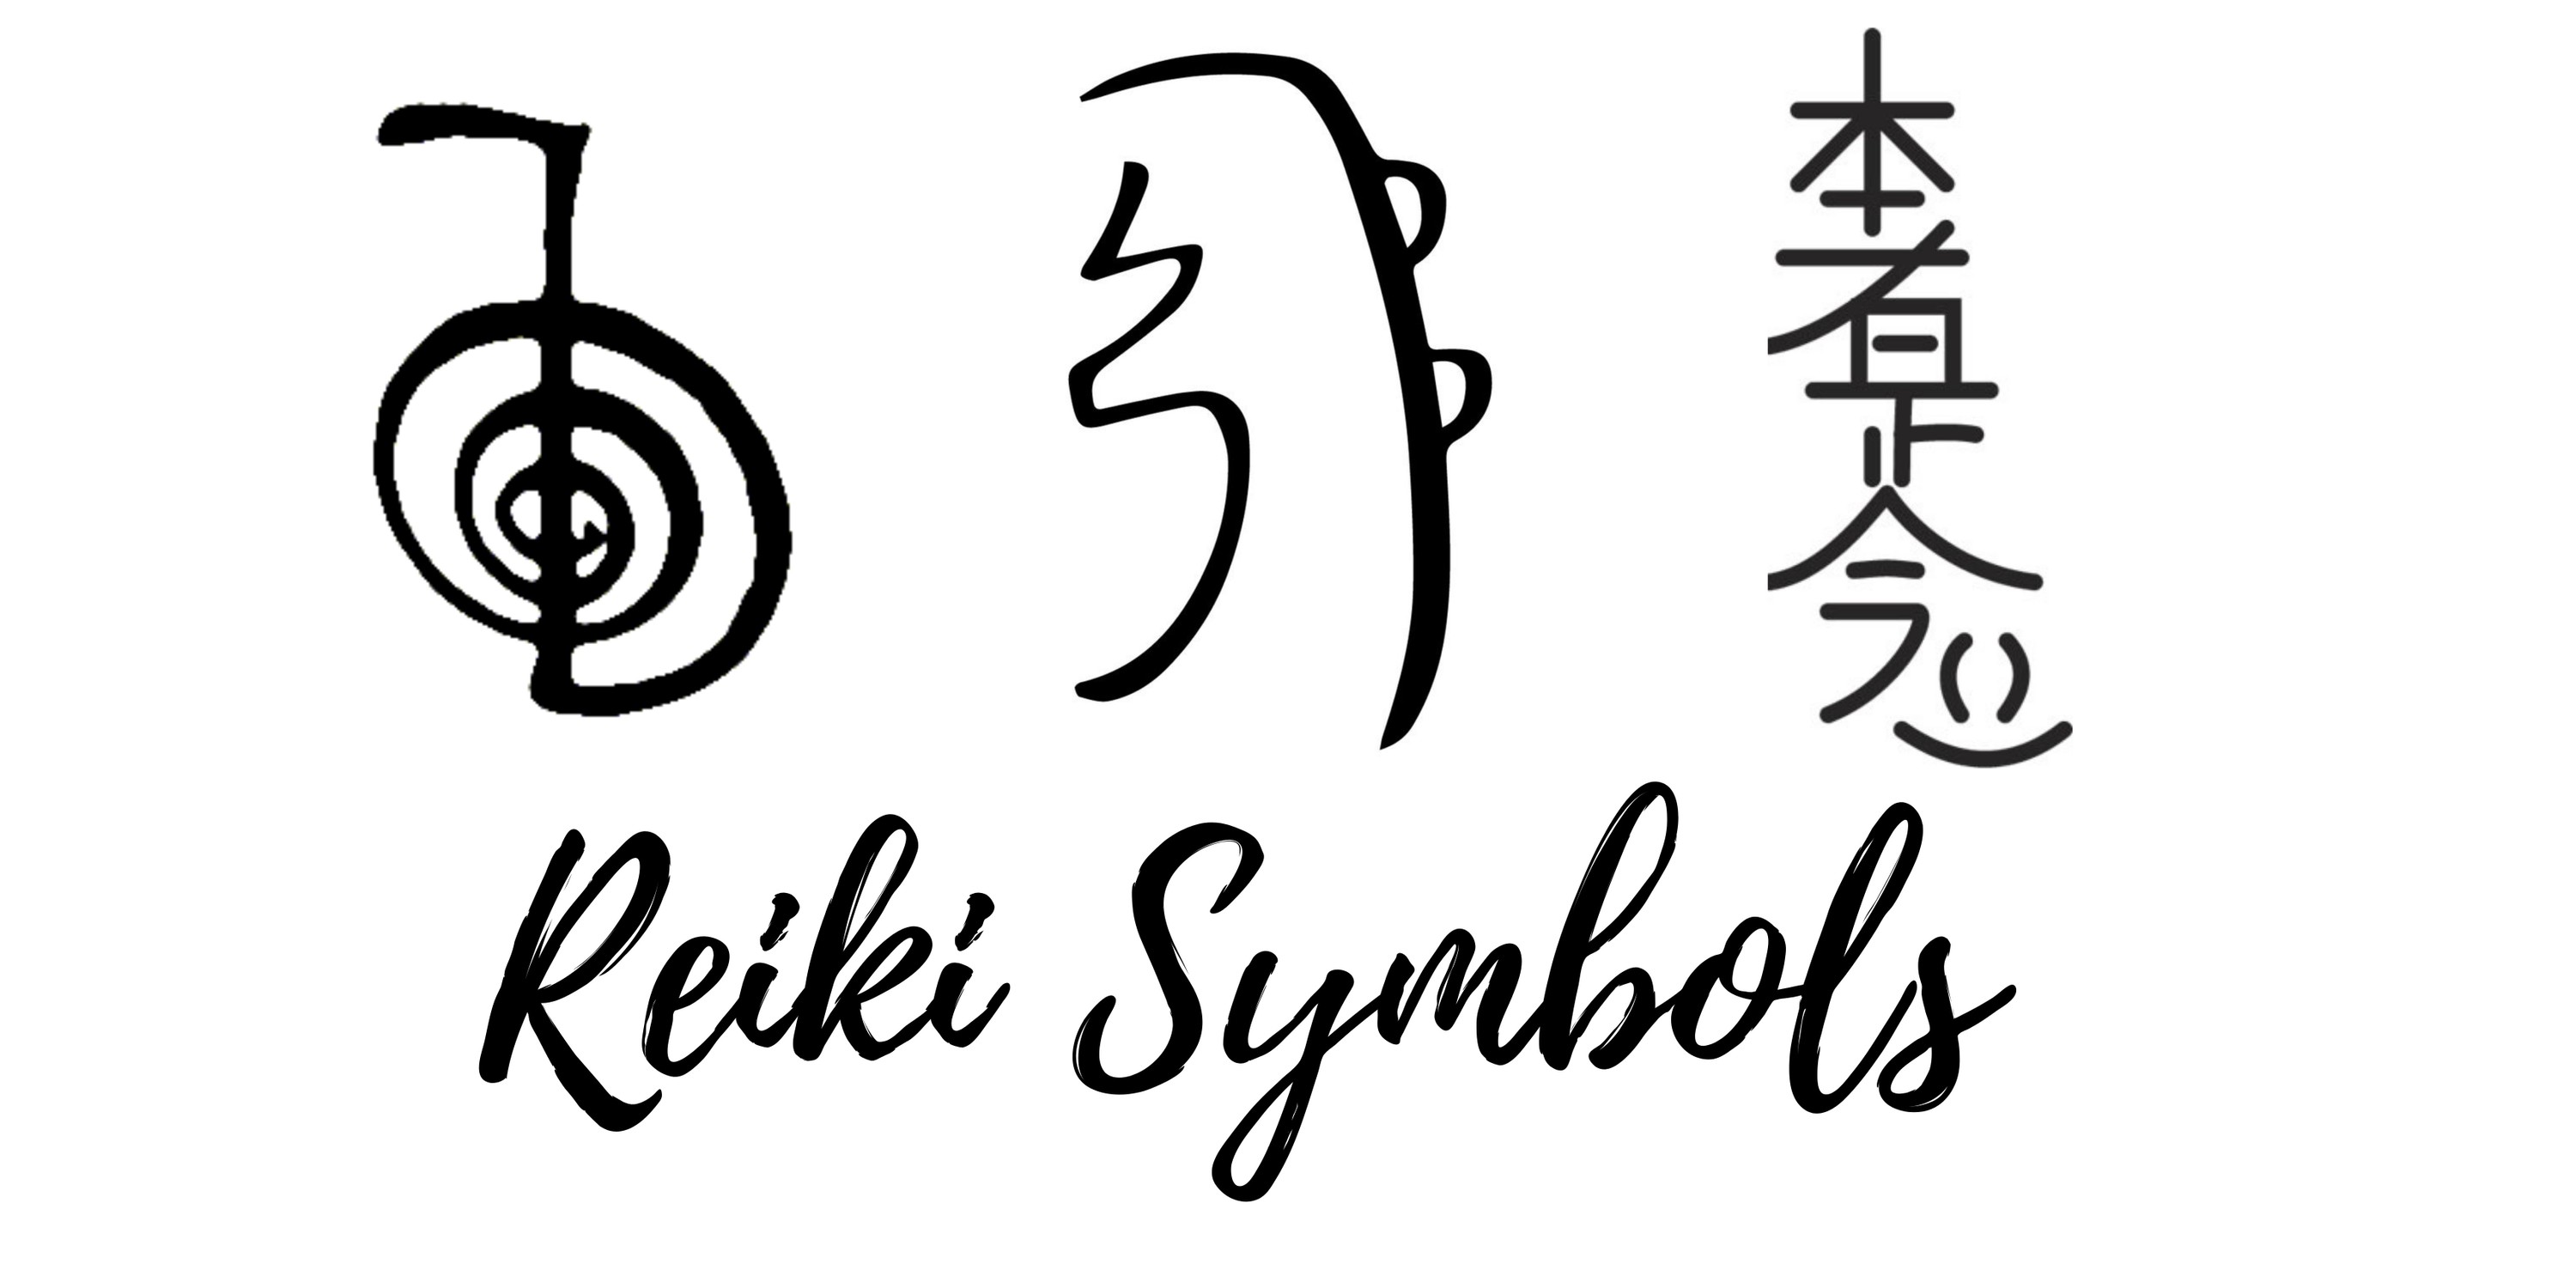 What Are The Reiki Symbols?